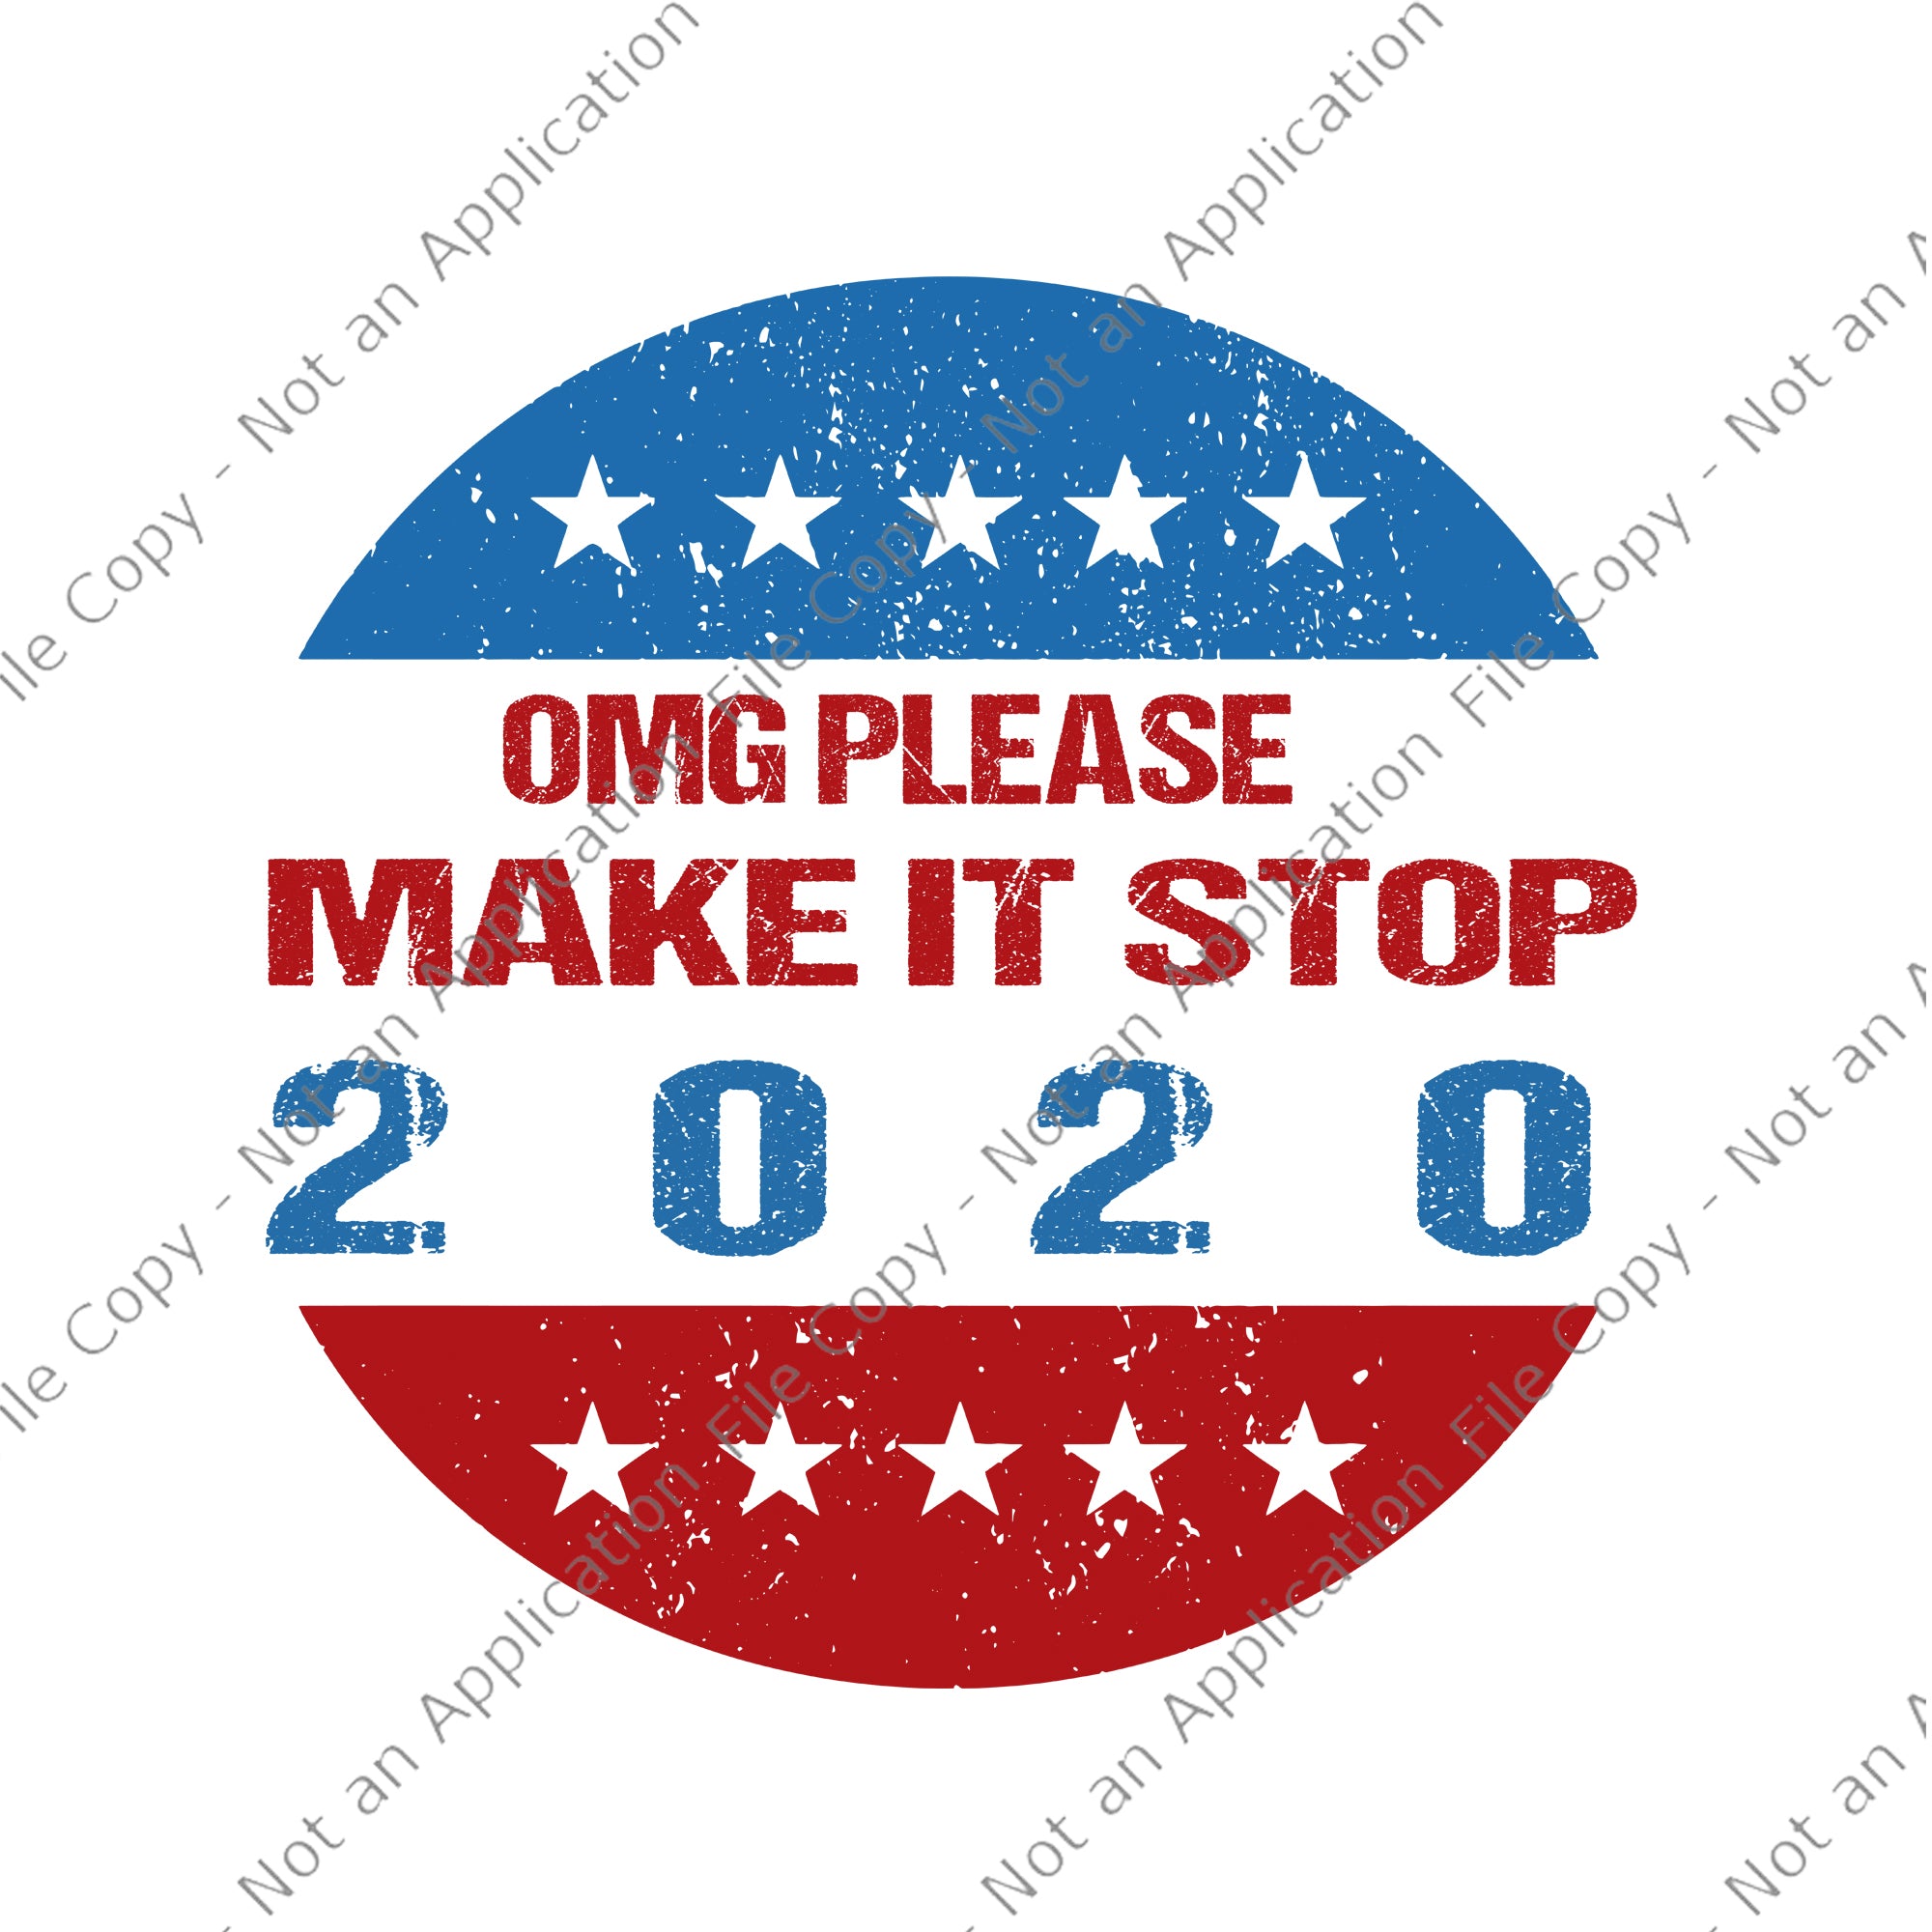 Omg please make it stop 2020 svg, omg please make it stop 2020, omg please make it stop 2020 png, omg please make it stop 2020 png, eps, dxf, svg file